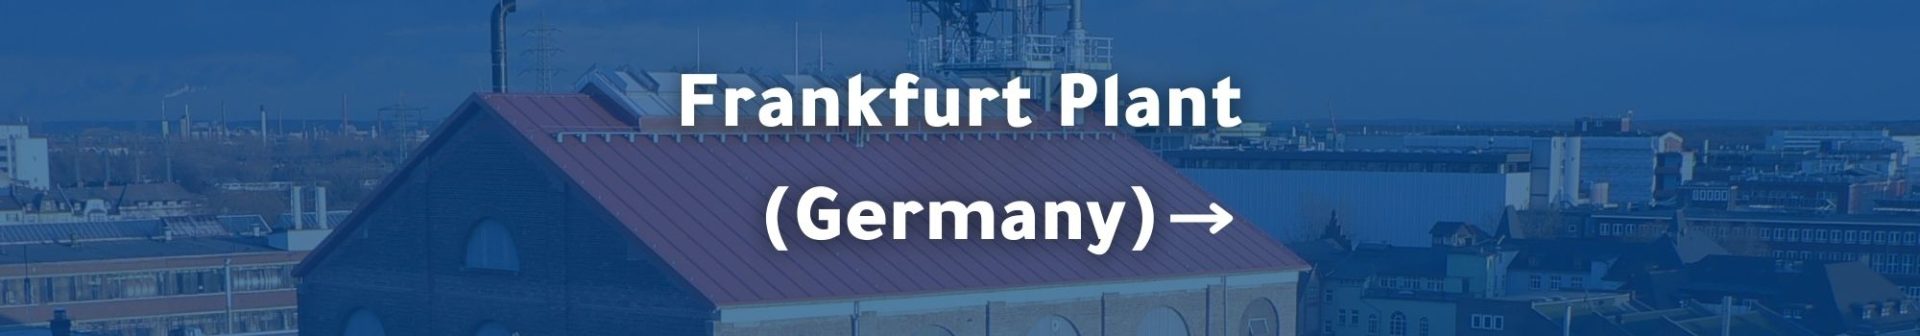 Frankfurt_Italmatch_banner